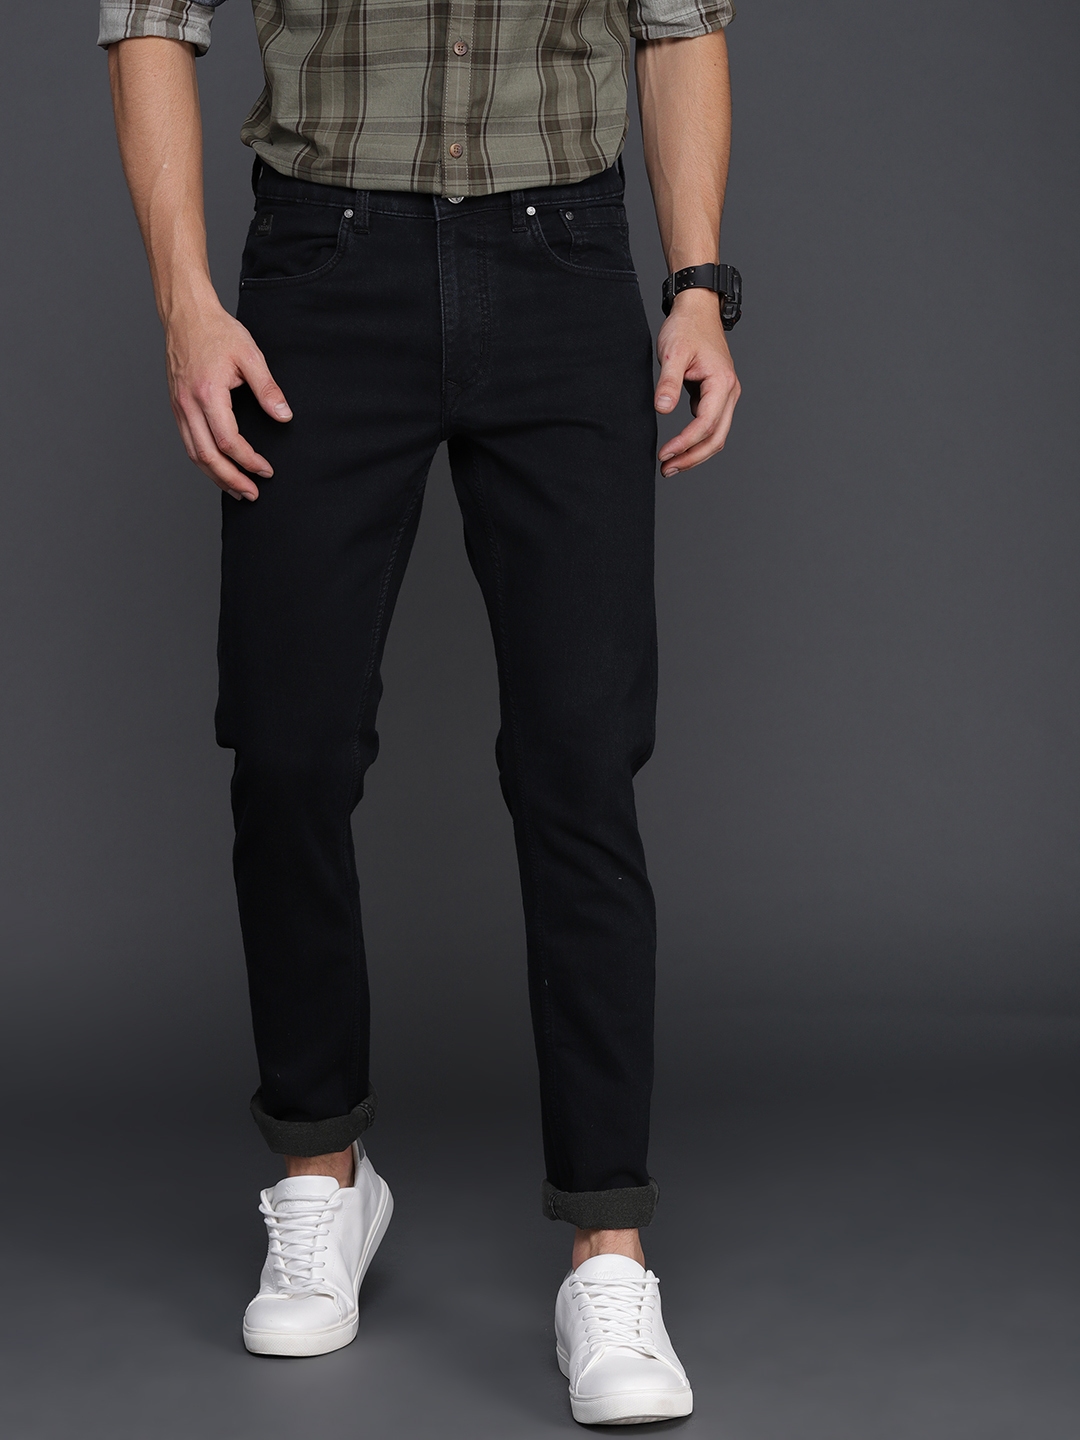 khaki jeans with side pockets